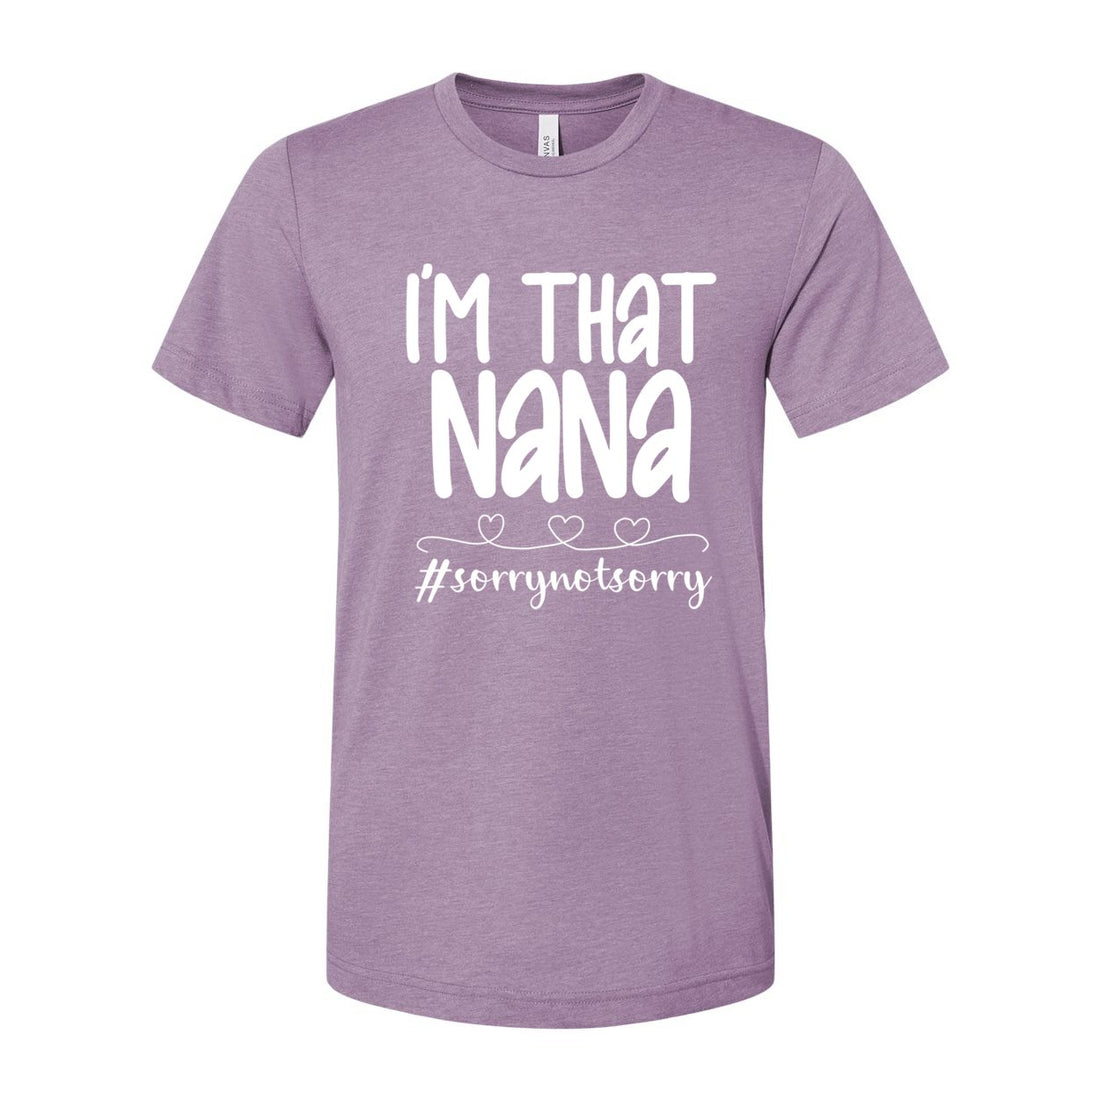 I'm That Nana Short Sleeve Jersey Tee - T-Shirts - Positively Sassy - I'm That Nana Short Sleeve Jersey Tee